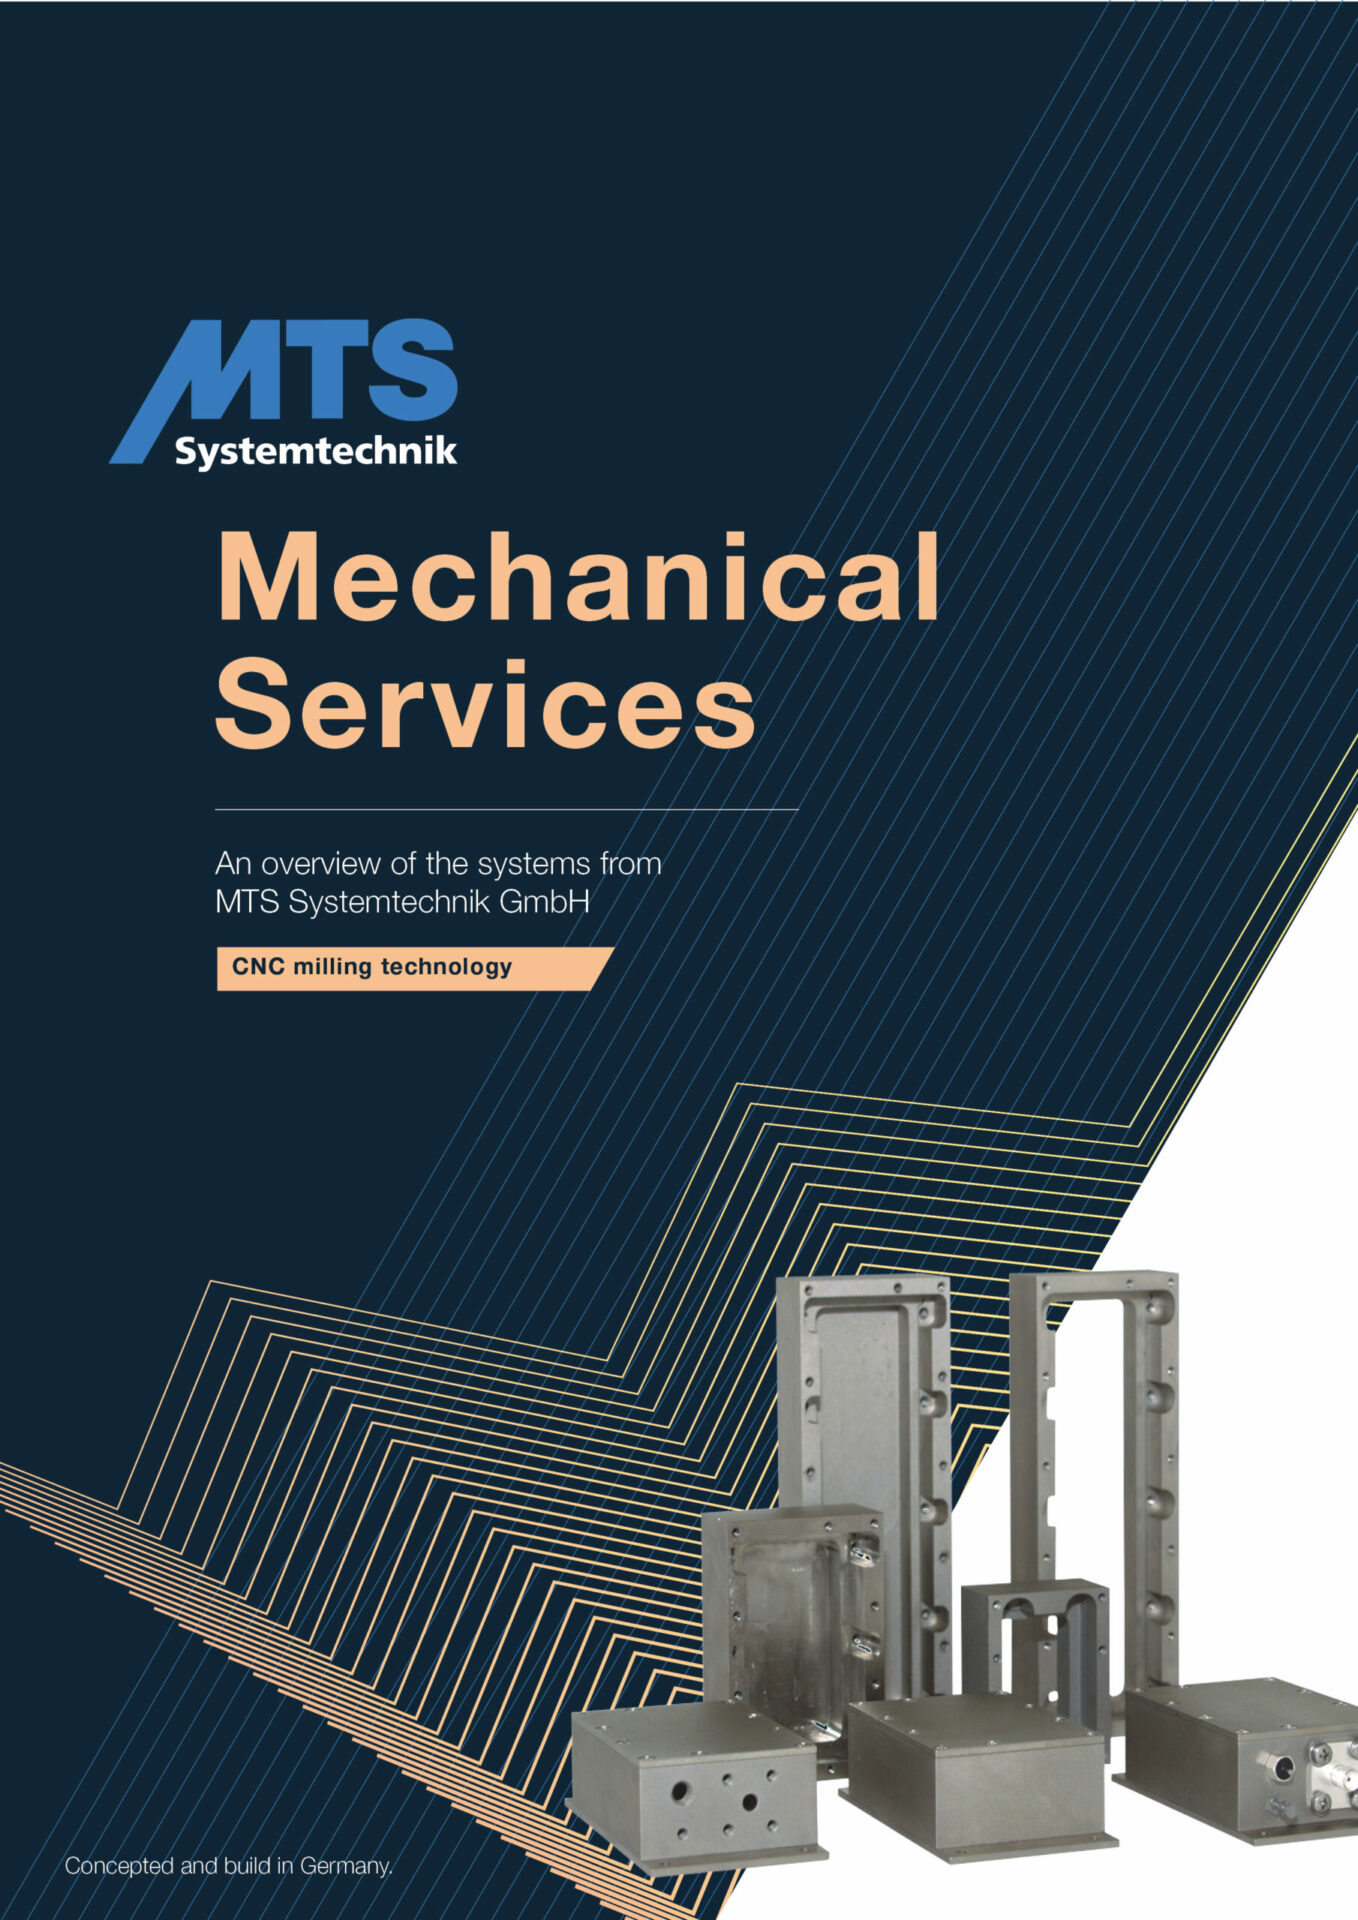 MTS_MechanicalServices_Layout_02-22-EN-scaled-2.jpg